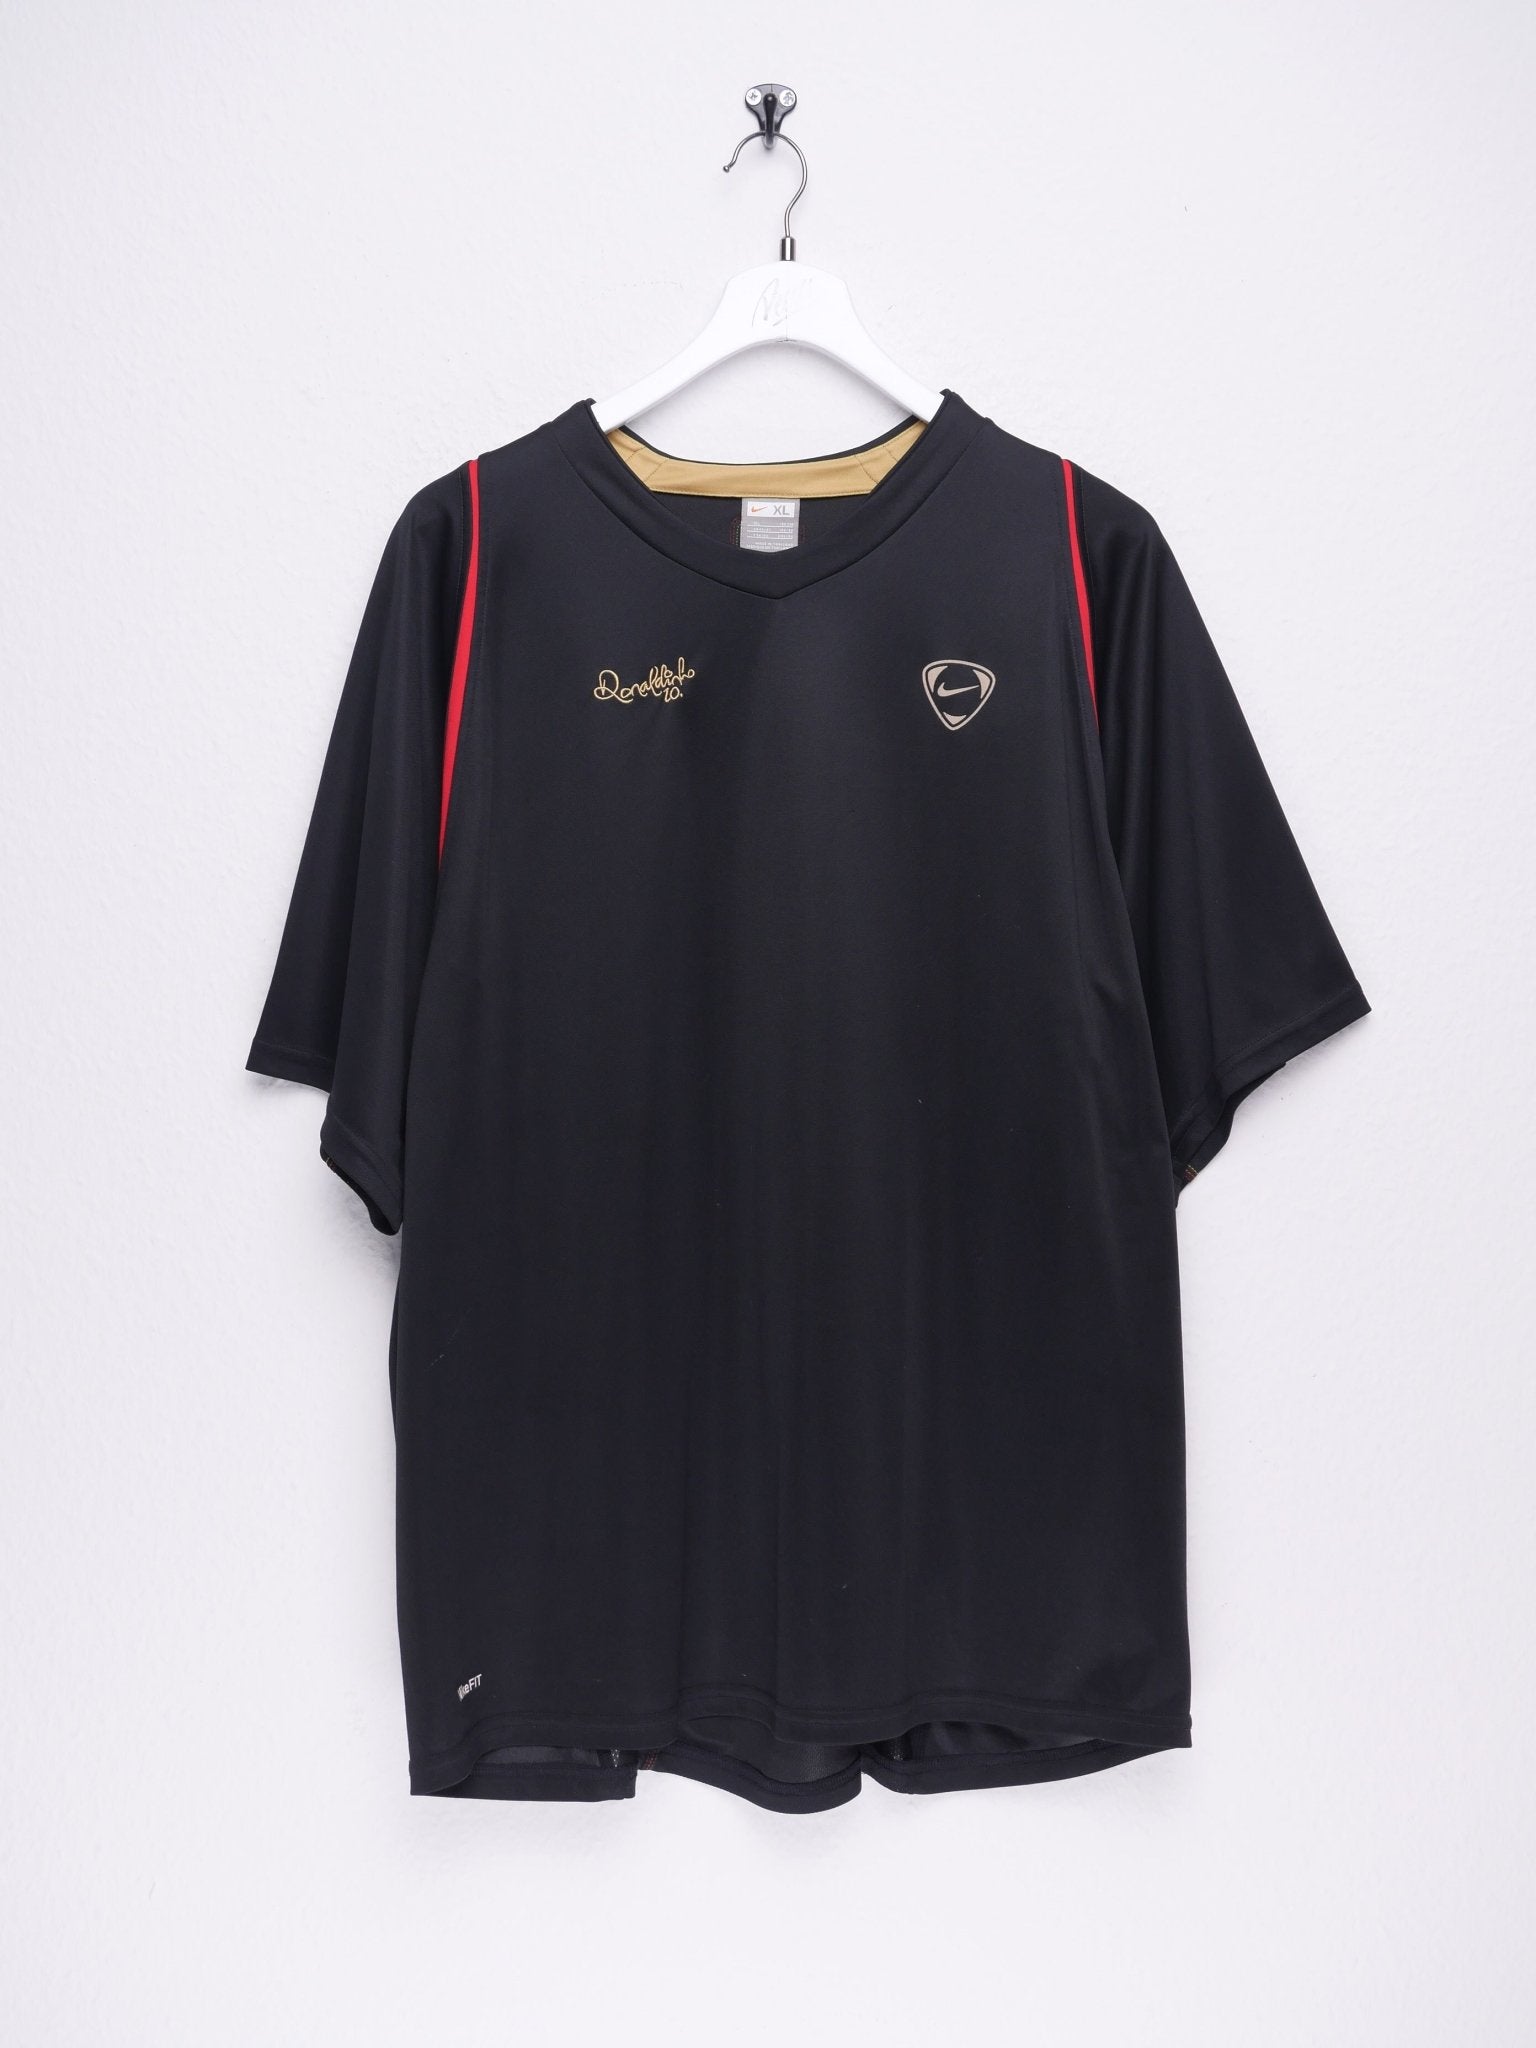 Nike Soccer printed Logo Vintage Jersey Shirt - Peeces